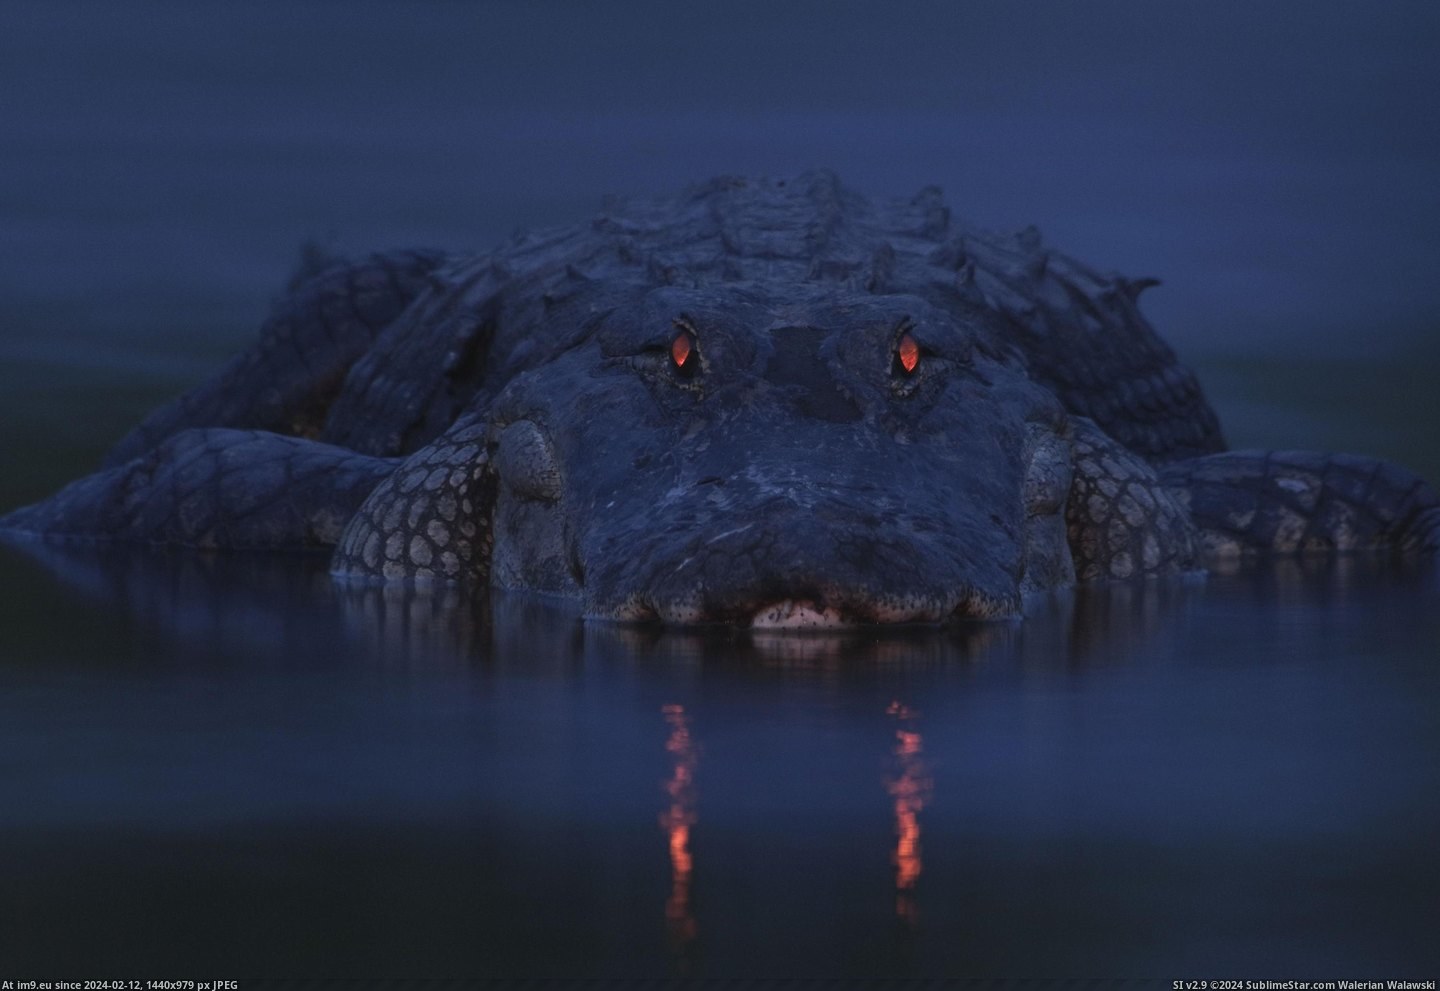 #Eyes #Alligator #Glowing #Dusk [Pics] Glowing eyes of an alligator at dusk Pic. (Изображение из альбом My r/PICS favs))